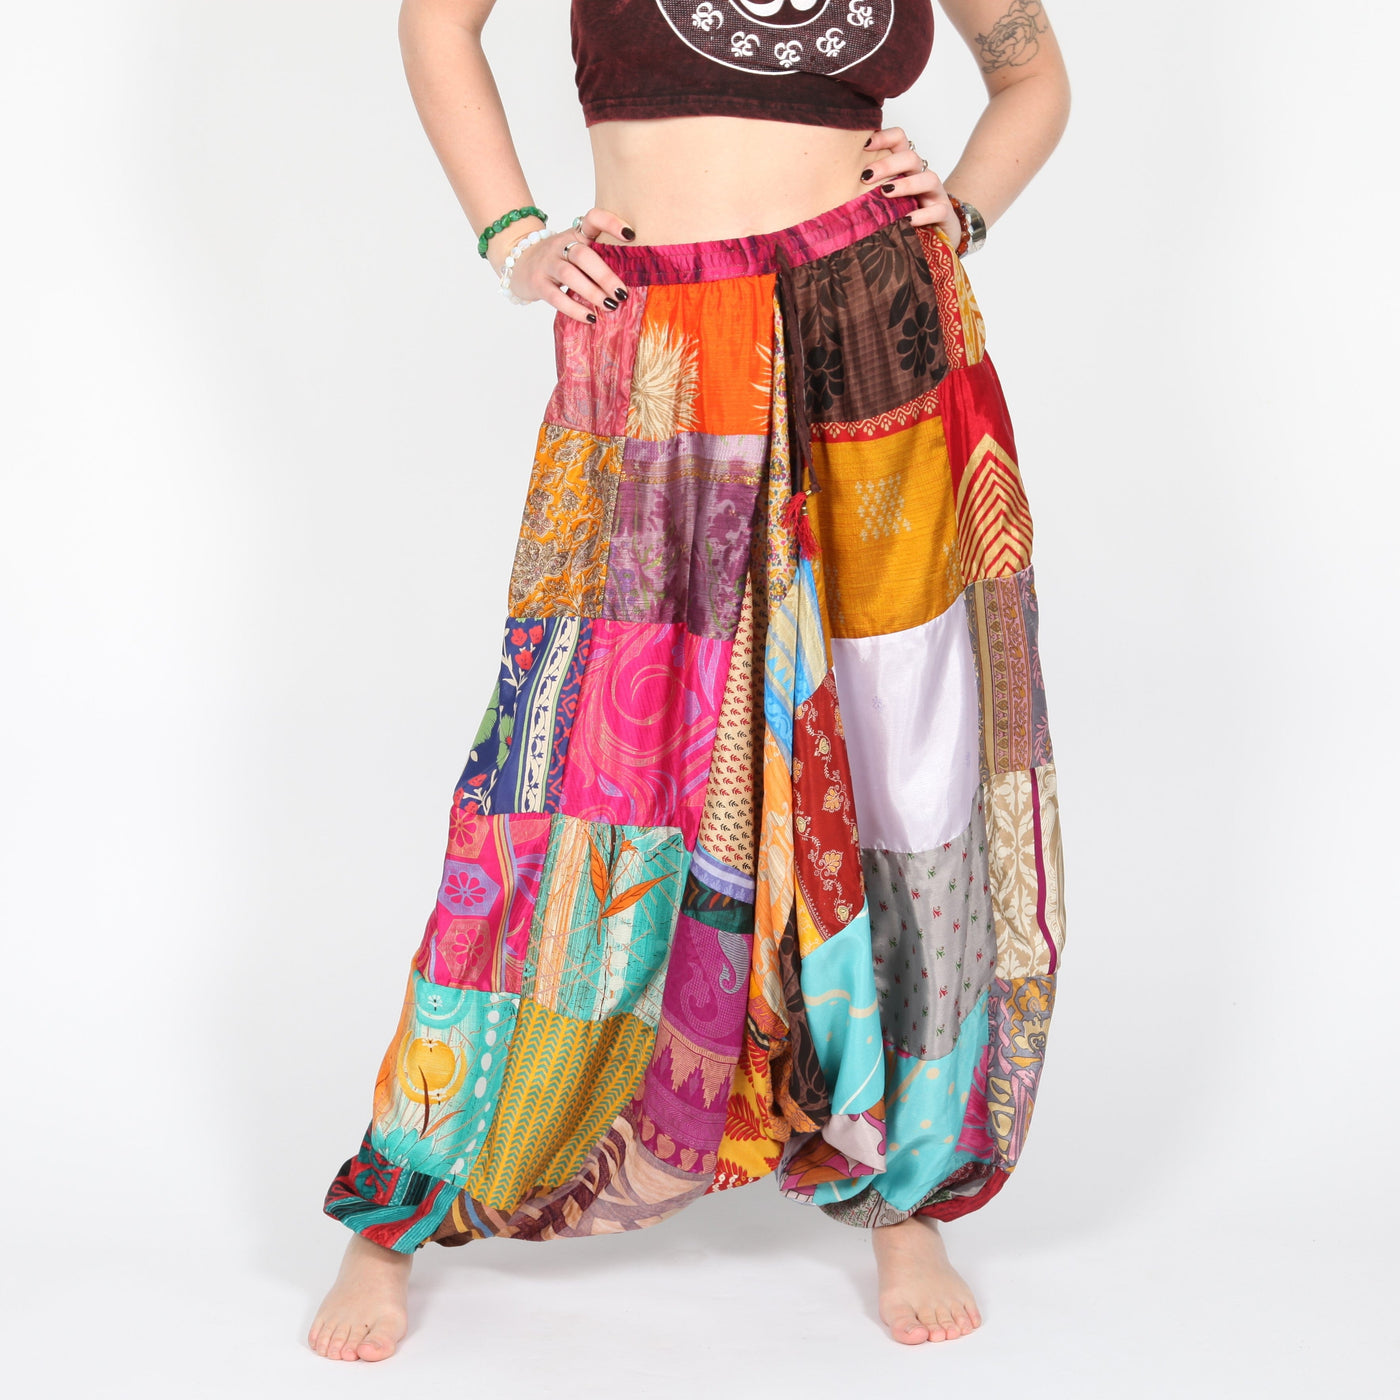 Upcycled Sari Harem Pants